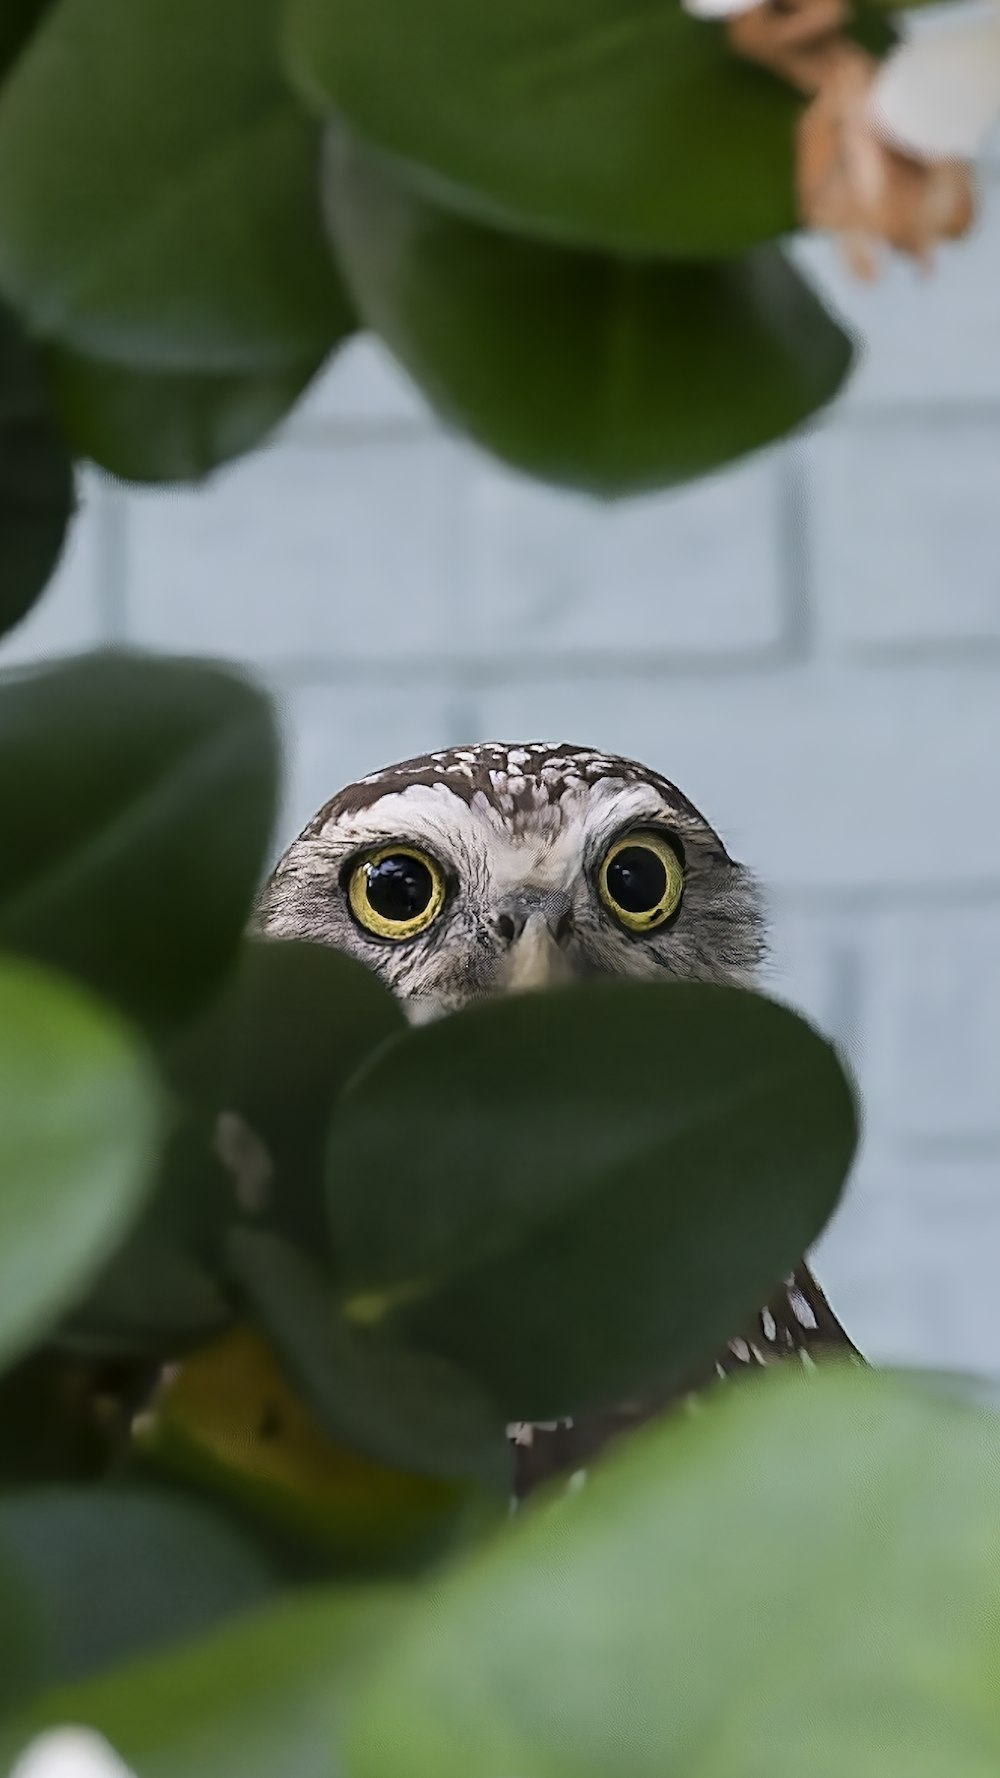 a small owl on a leaf